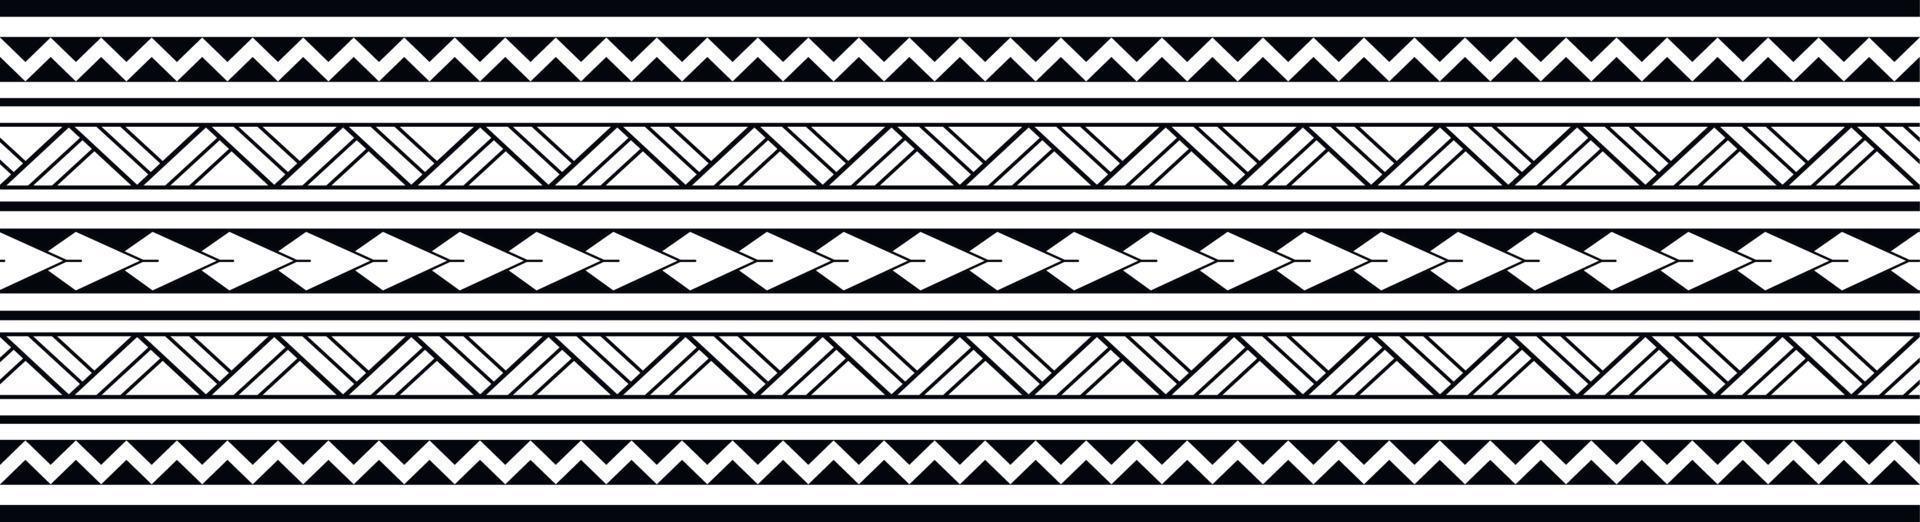 pulsera de tatuaje polinesio maorí. vector de patrones sin fisuras de manga tribal.